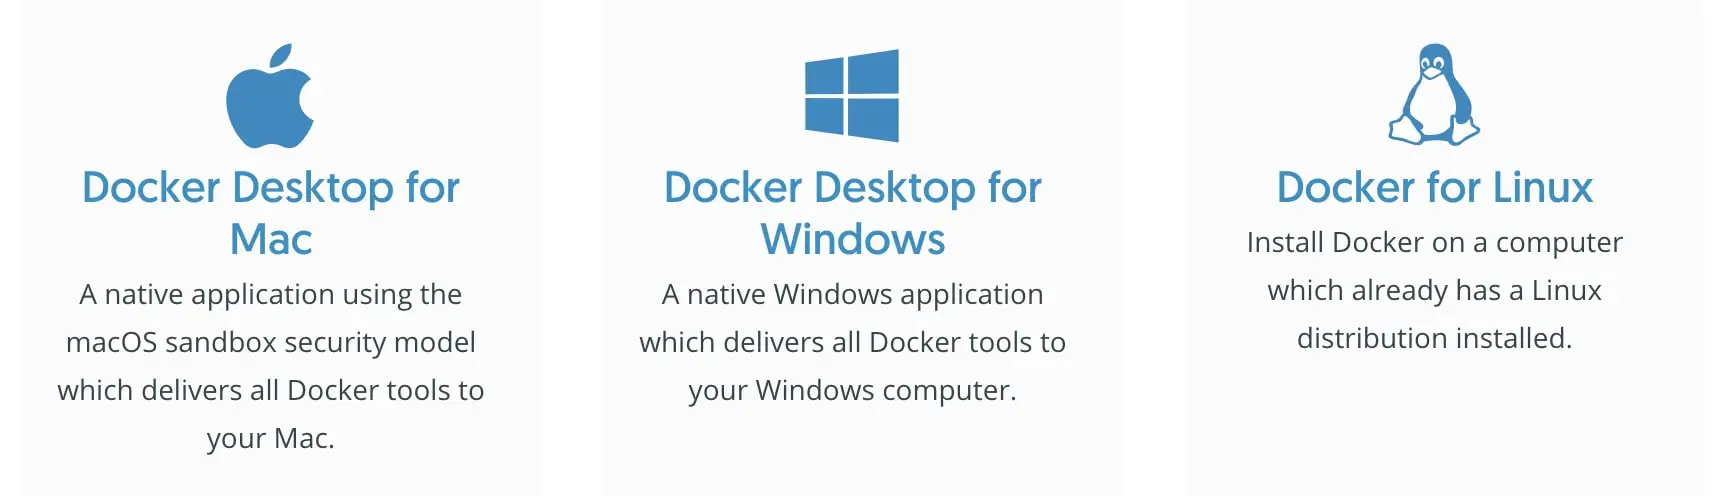 docker 1.12.6 for mac download